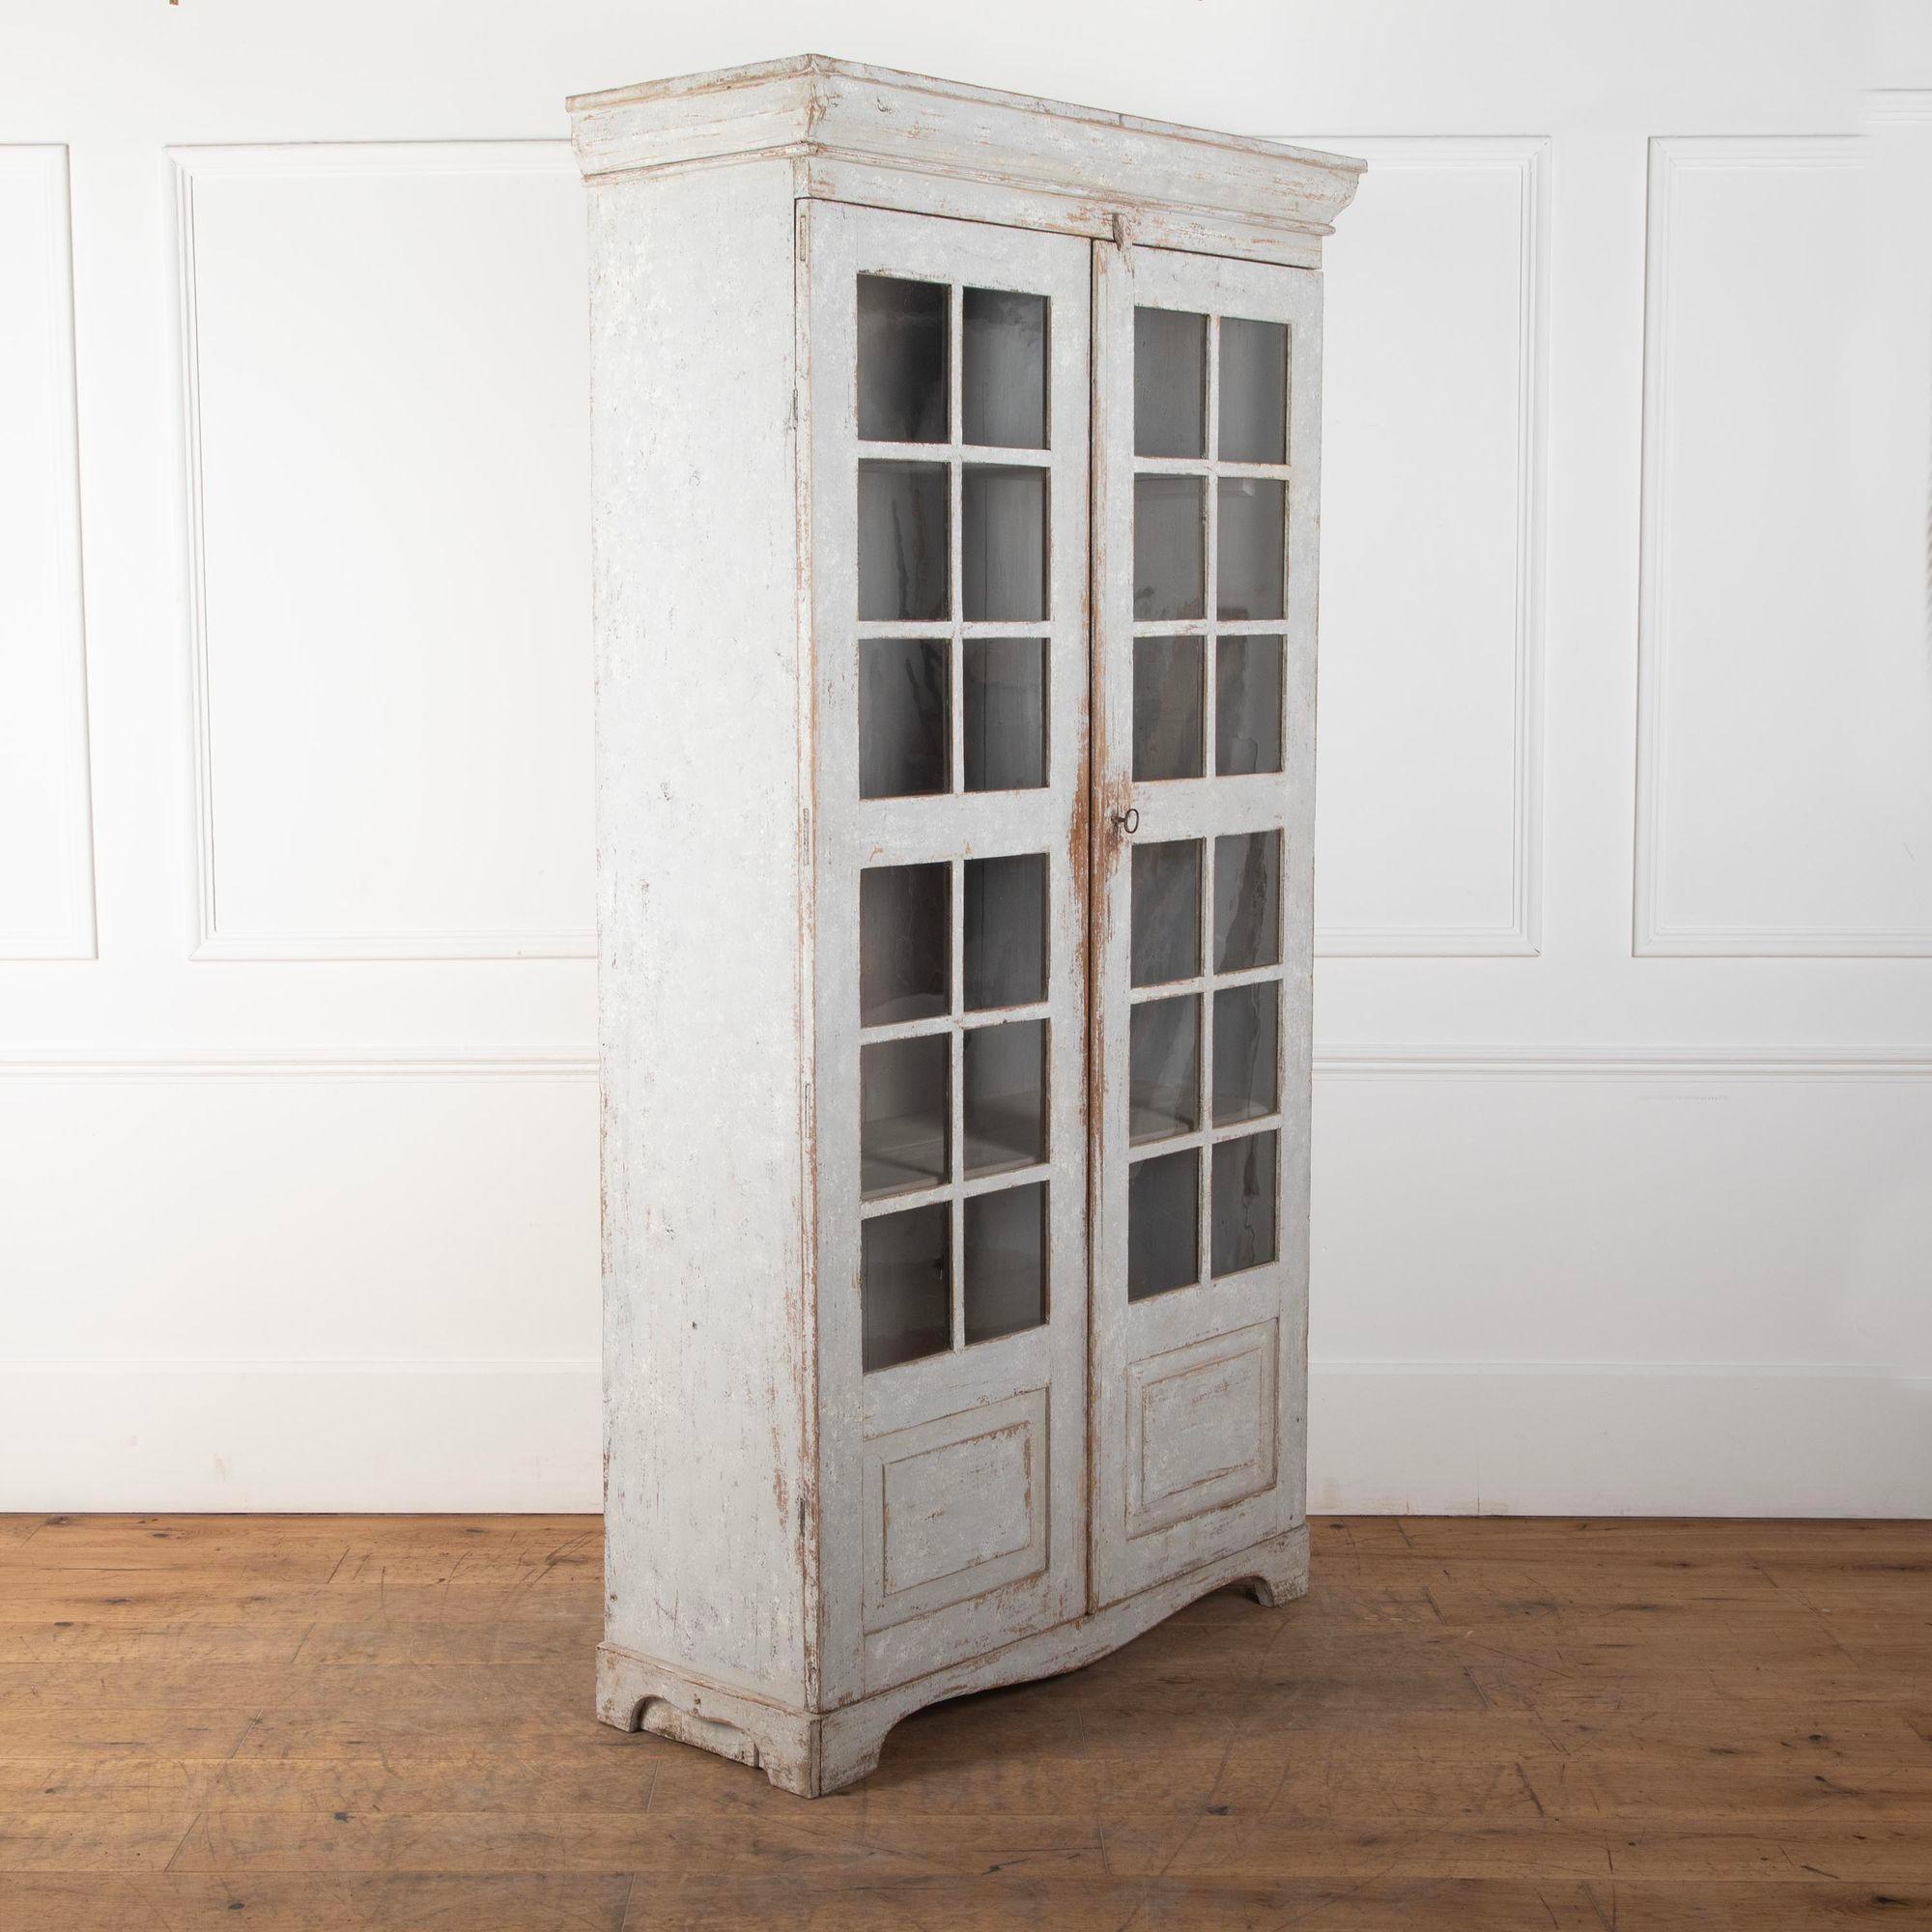 Beautiful 19th Century Swedish painted glazed bookcase / display cabinet.
Circa 1820.